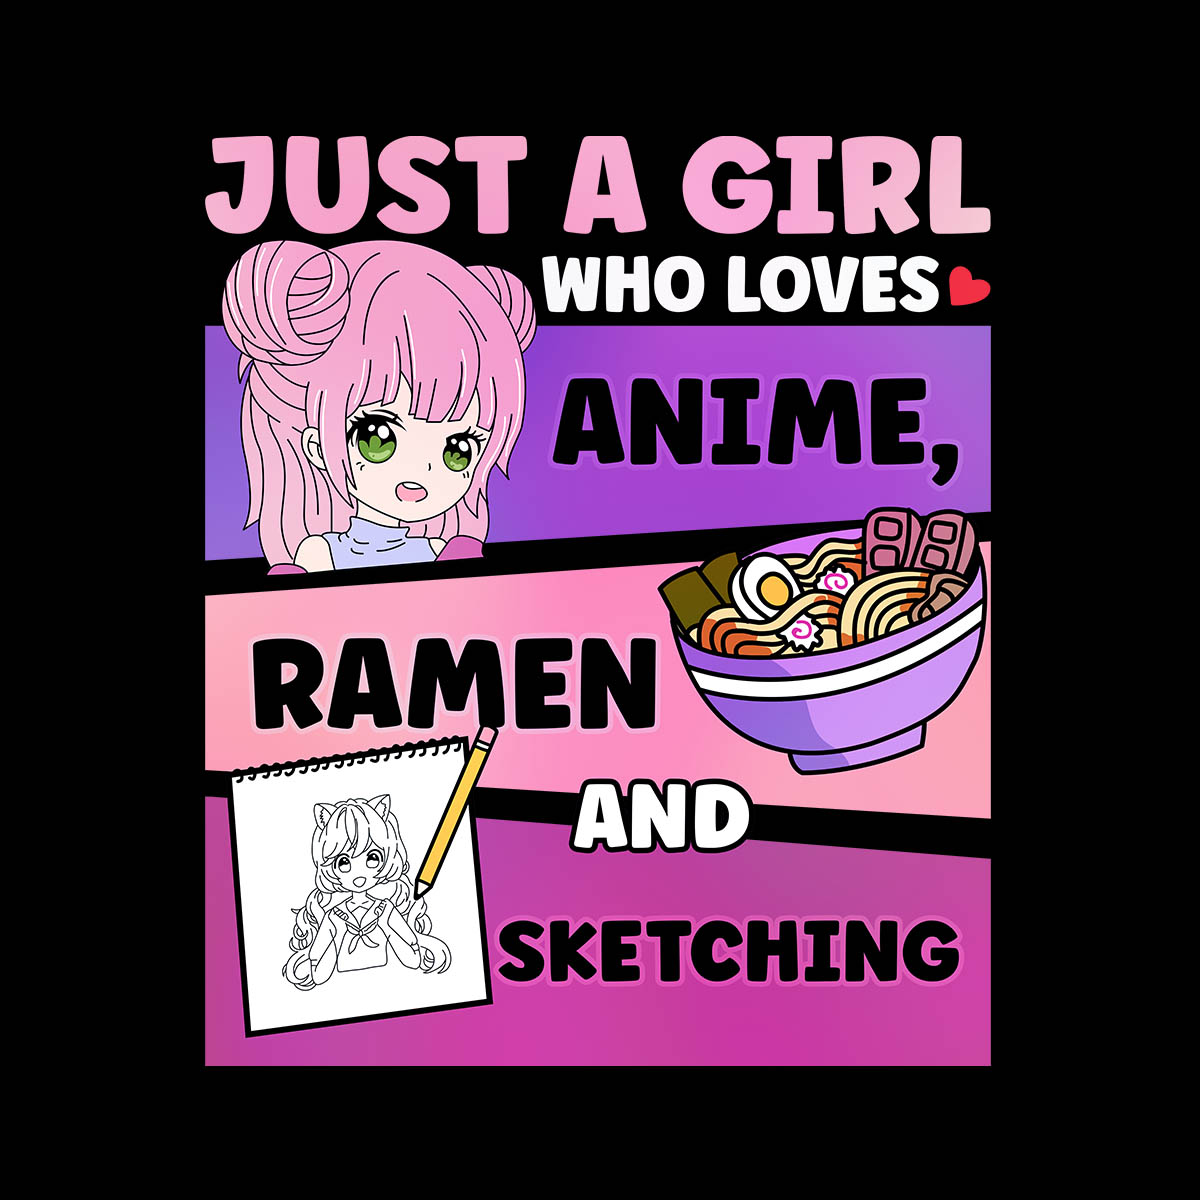 Just A Girl Who Loves Anime Ramen And Sketching Girl Harajuku Anime T-shirt for Kids